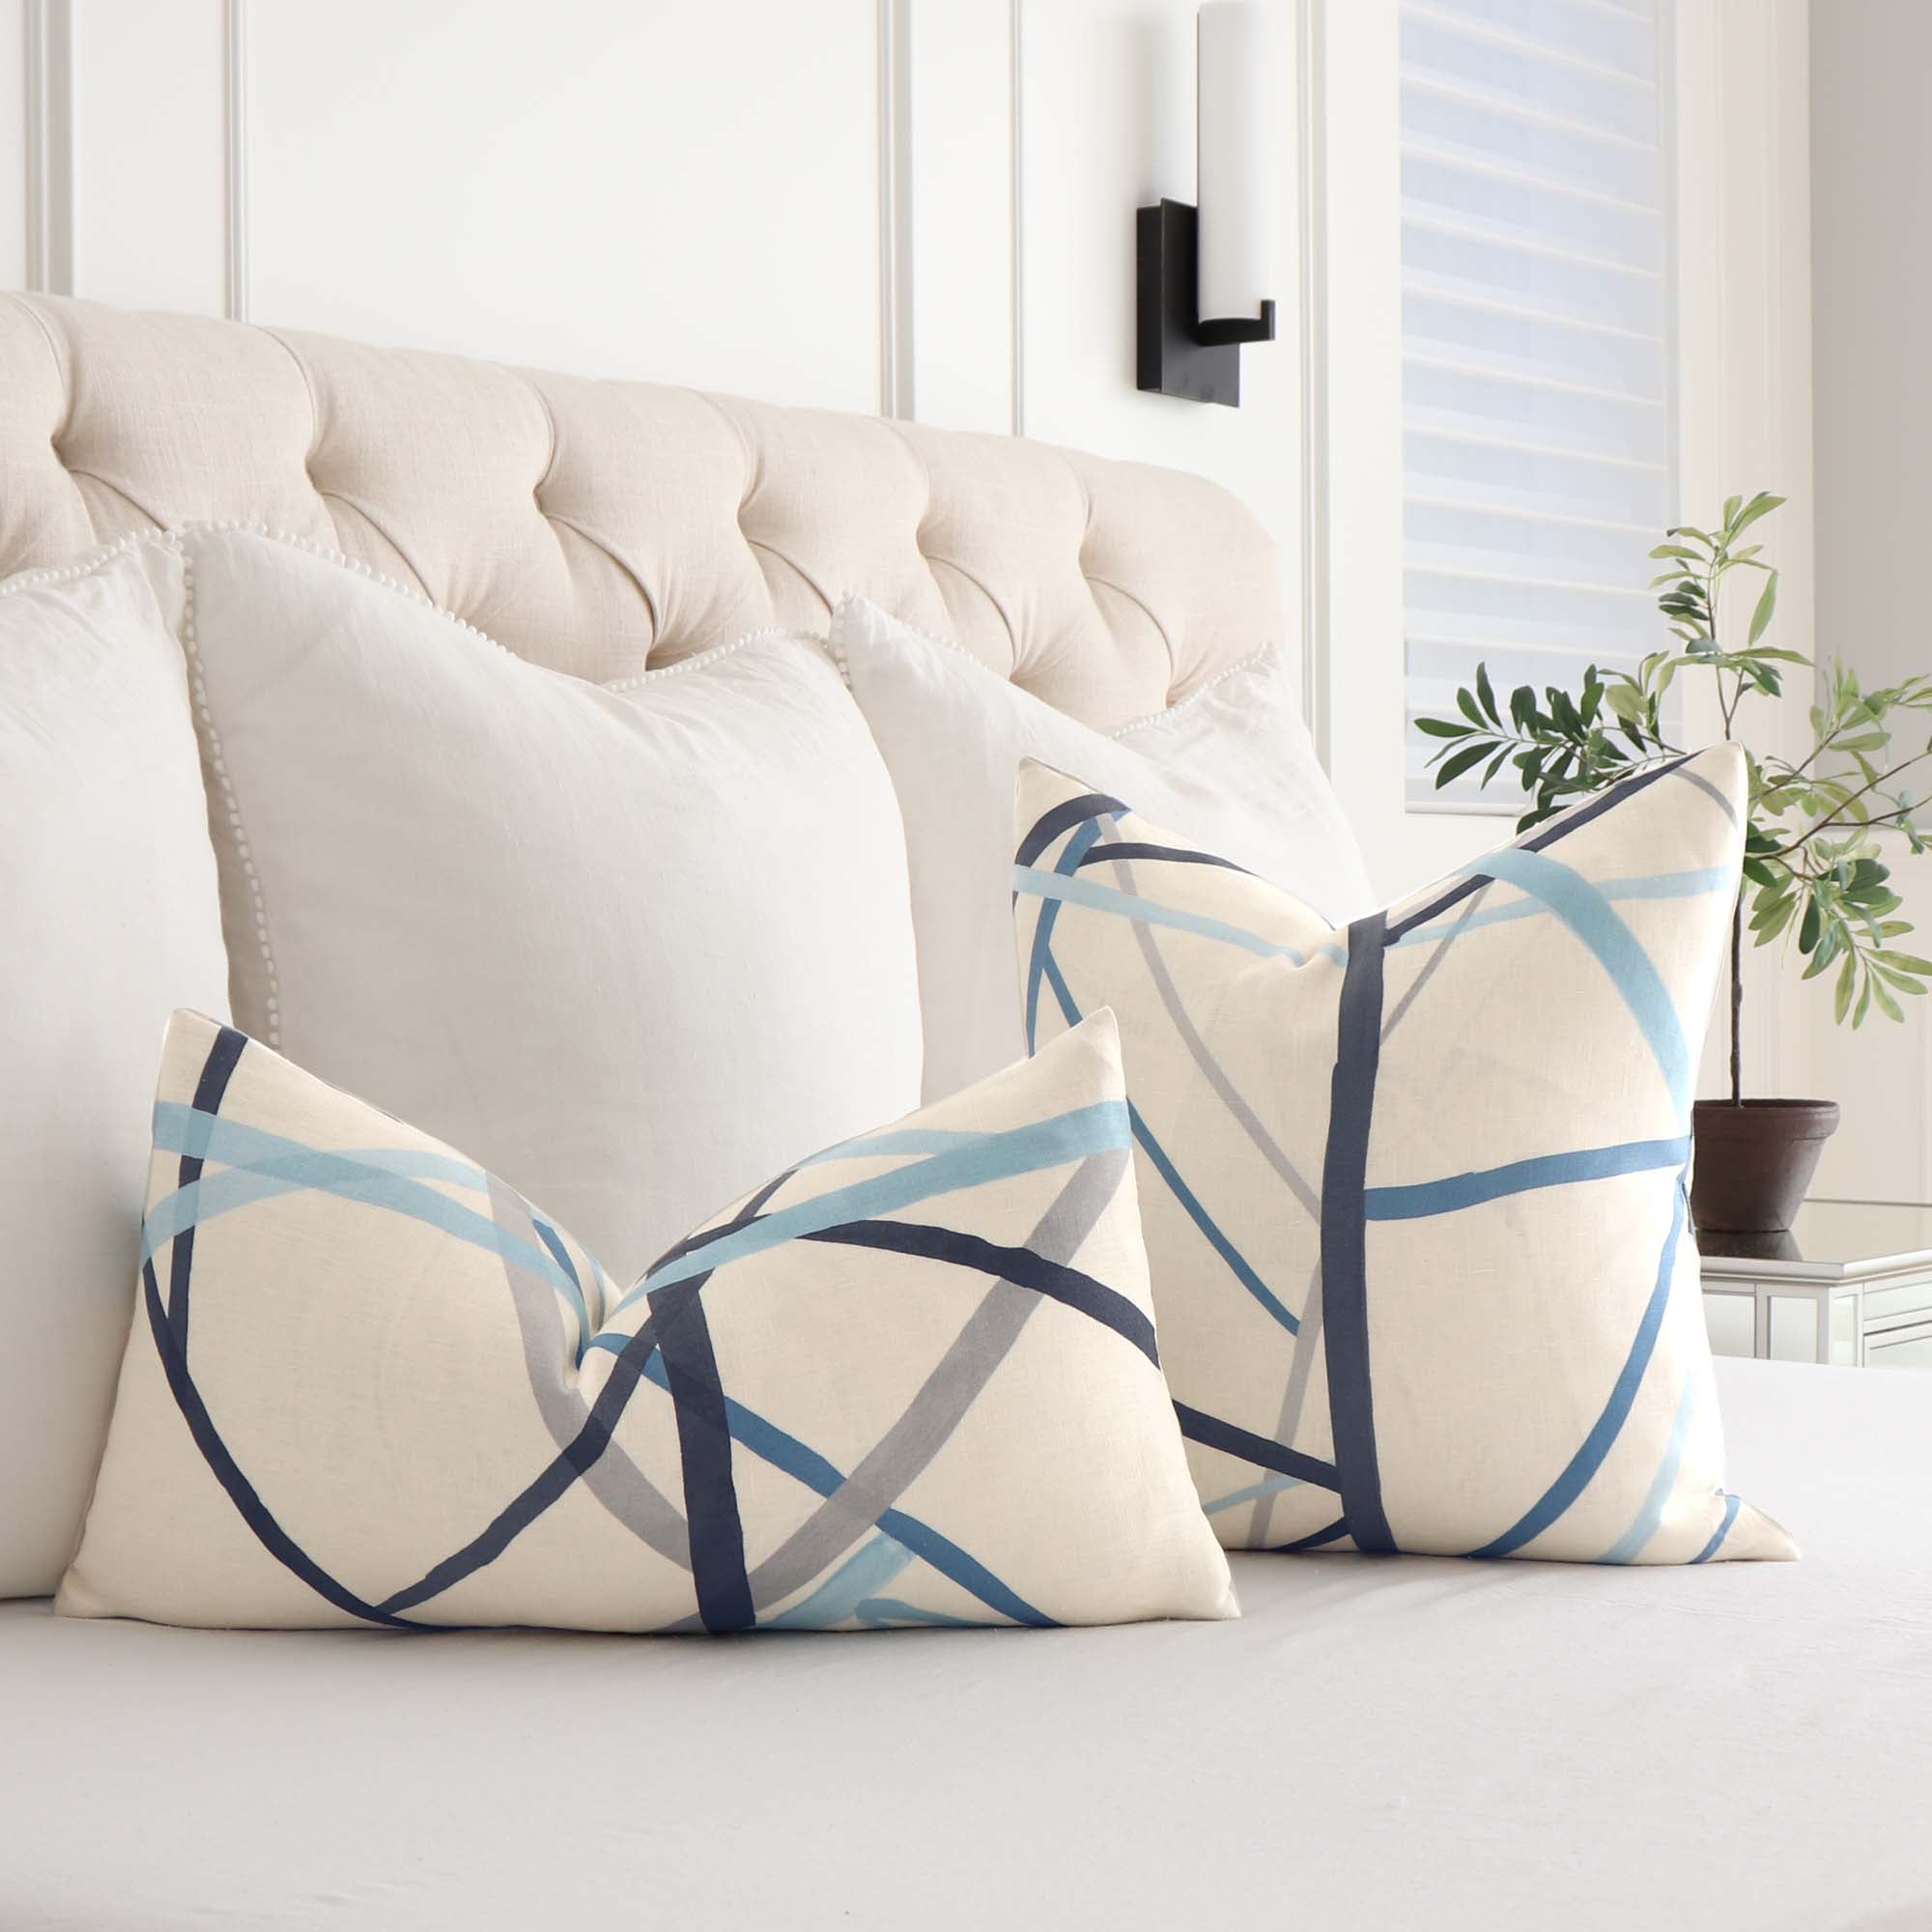 Kelly Wearstler Simpatico Sky Blue Striped Designer Throw Pillow Cover in Bedroom